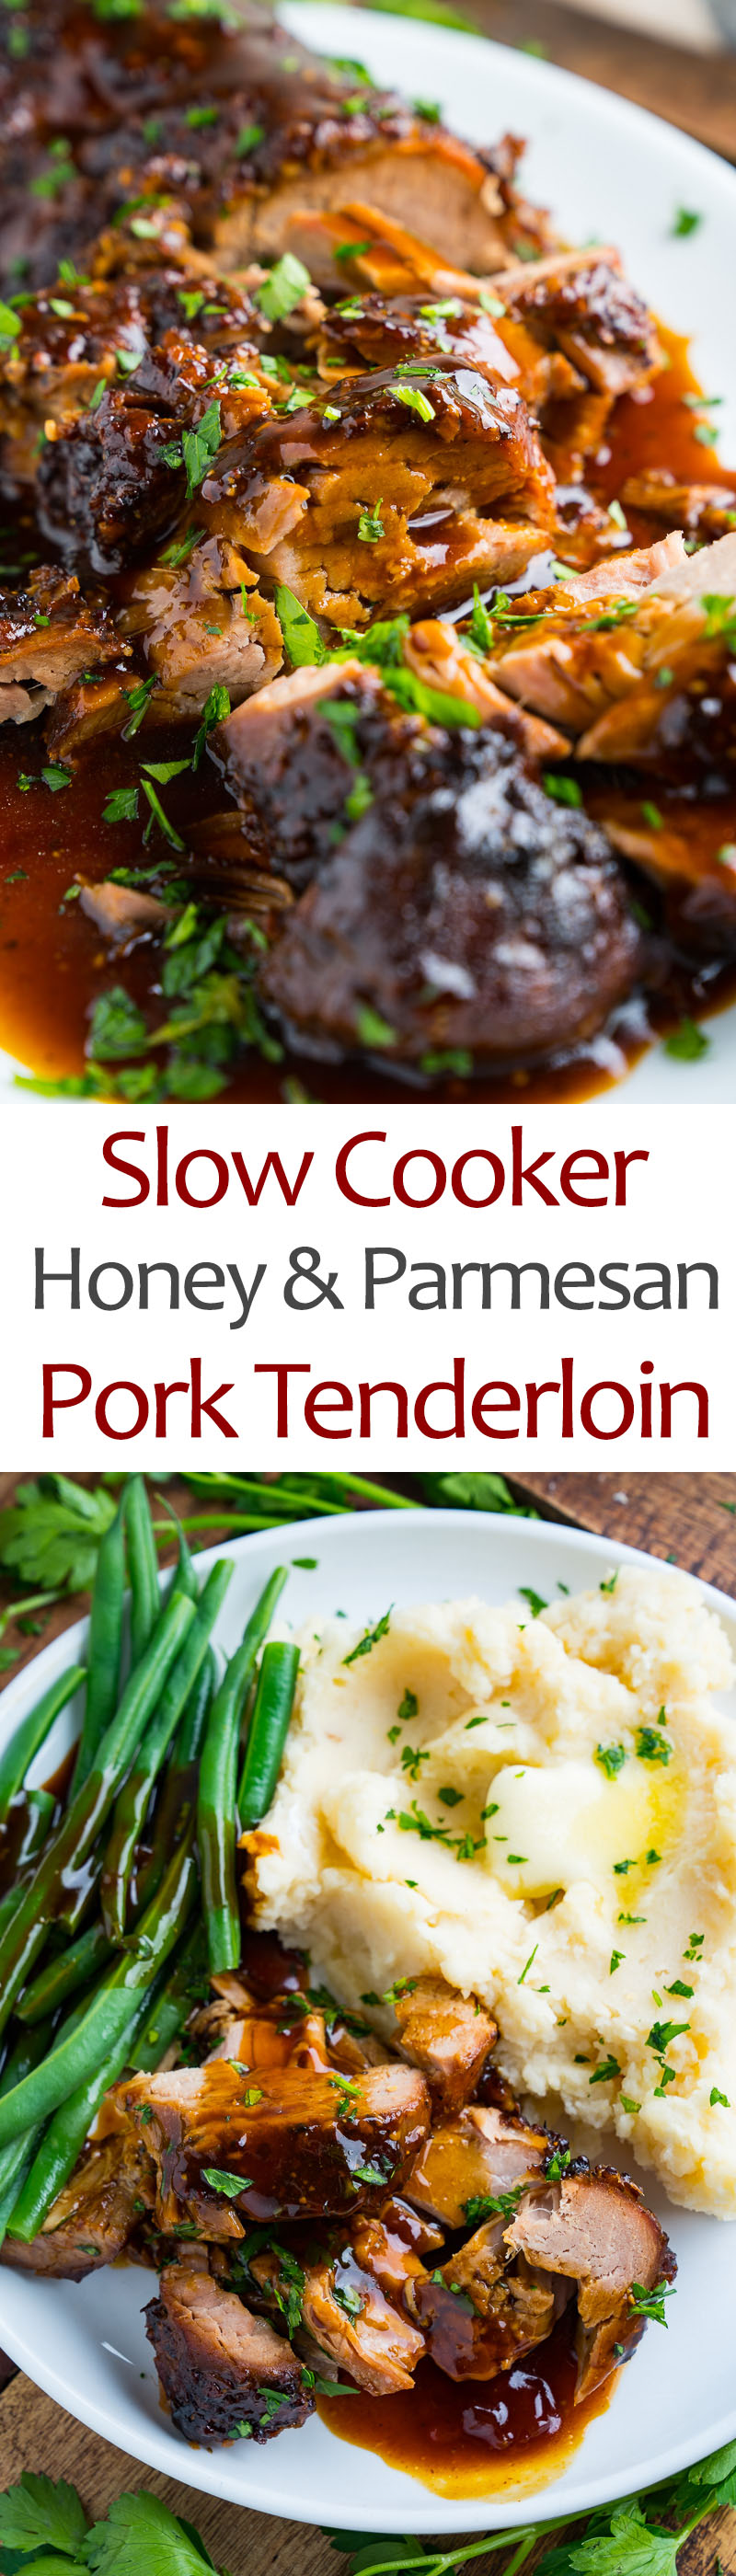 Slow Cooker Parmesan and Honey Pork Tenderloin